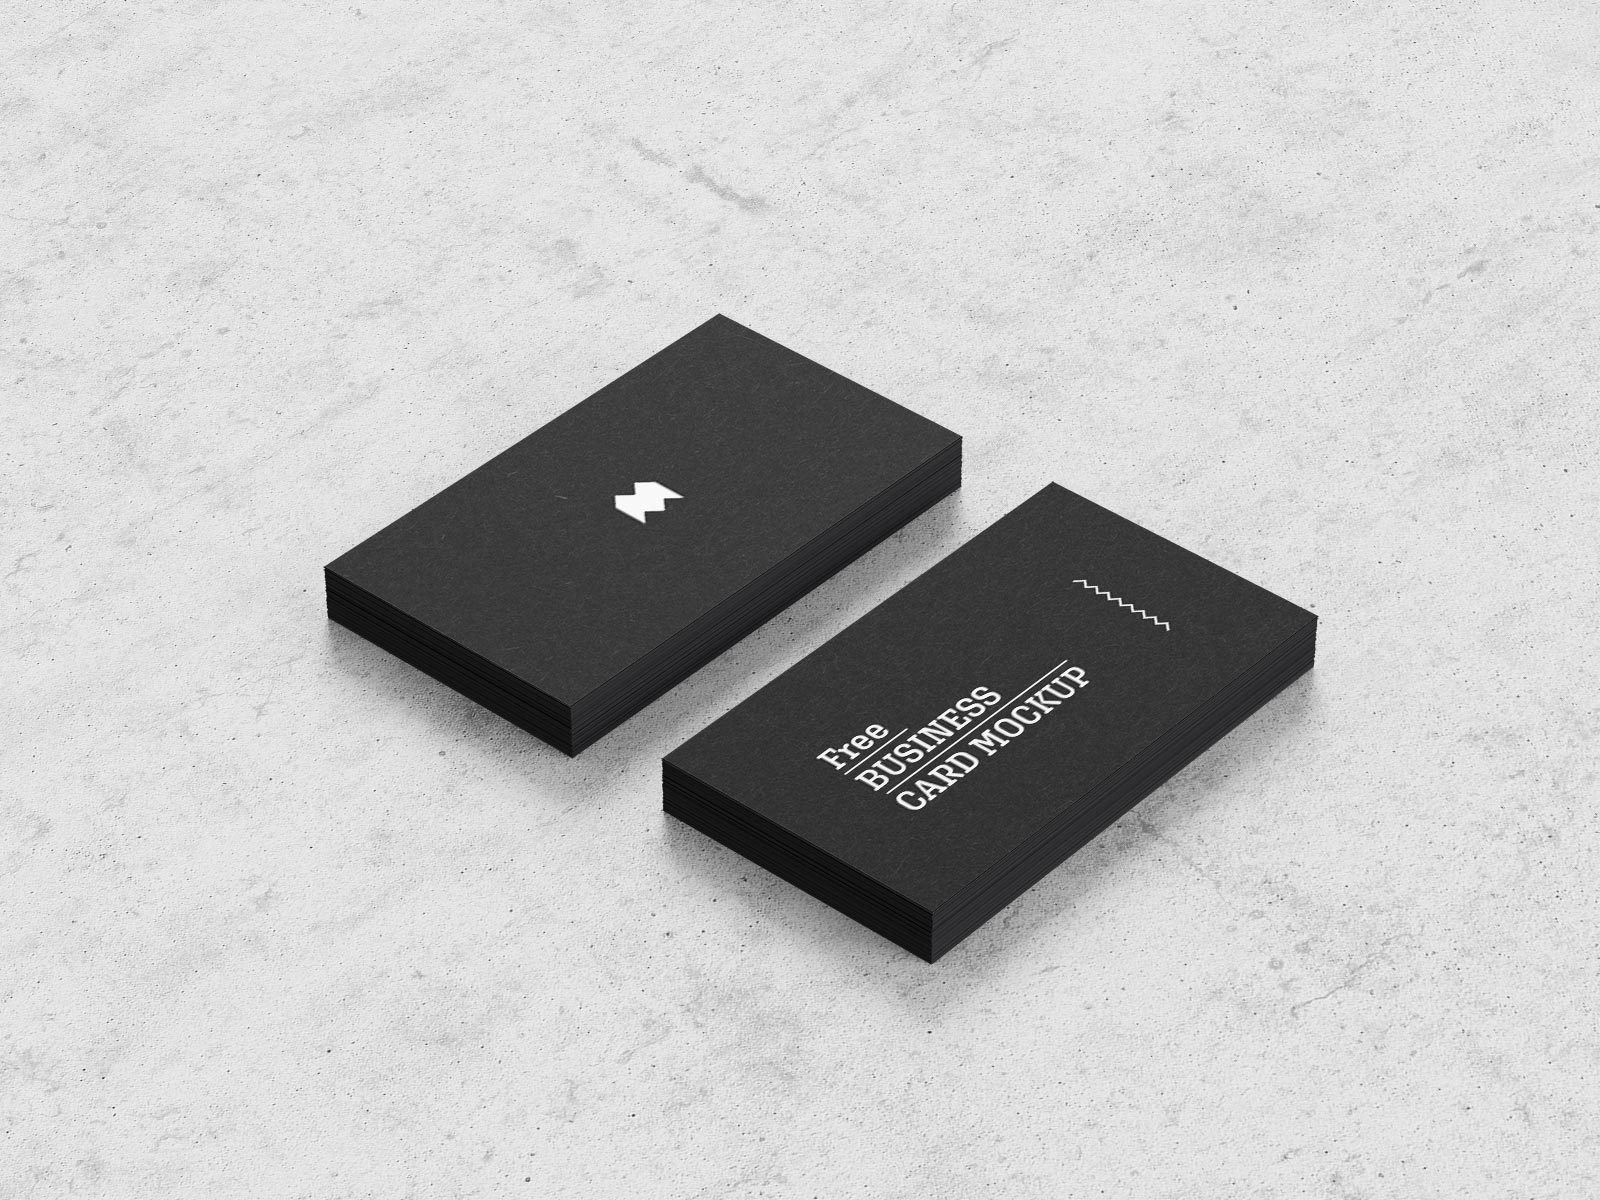 Free Standard Size Black Business Card Mockup PSD Set (1)